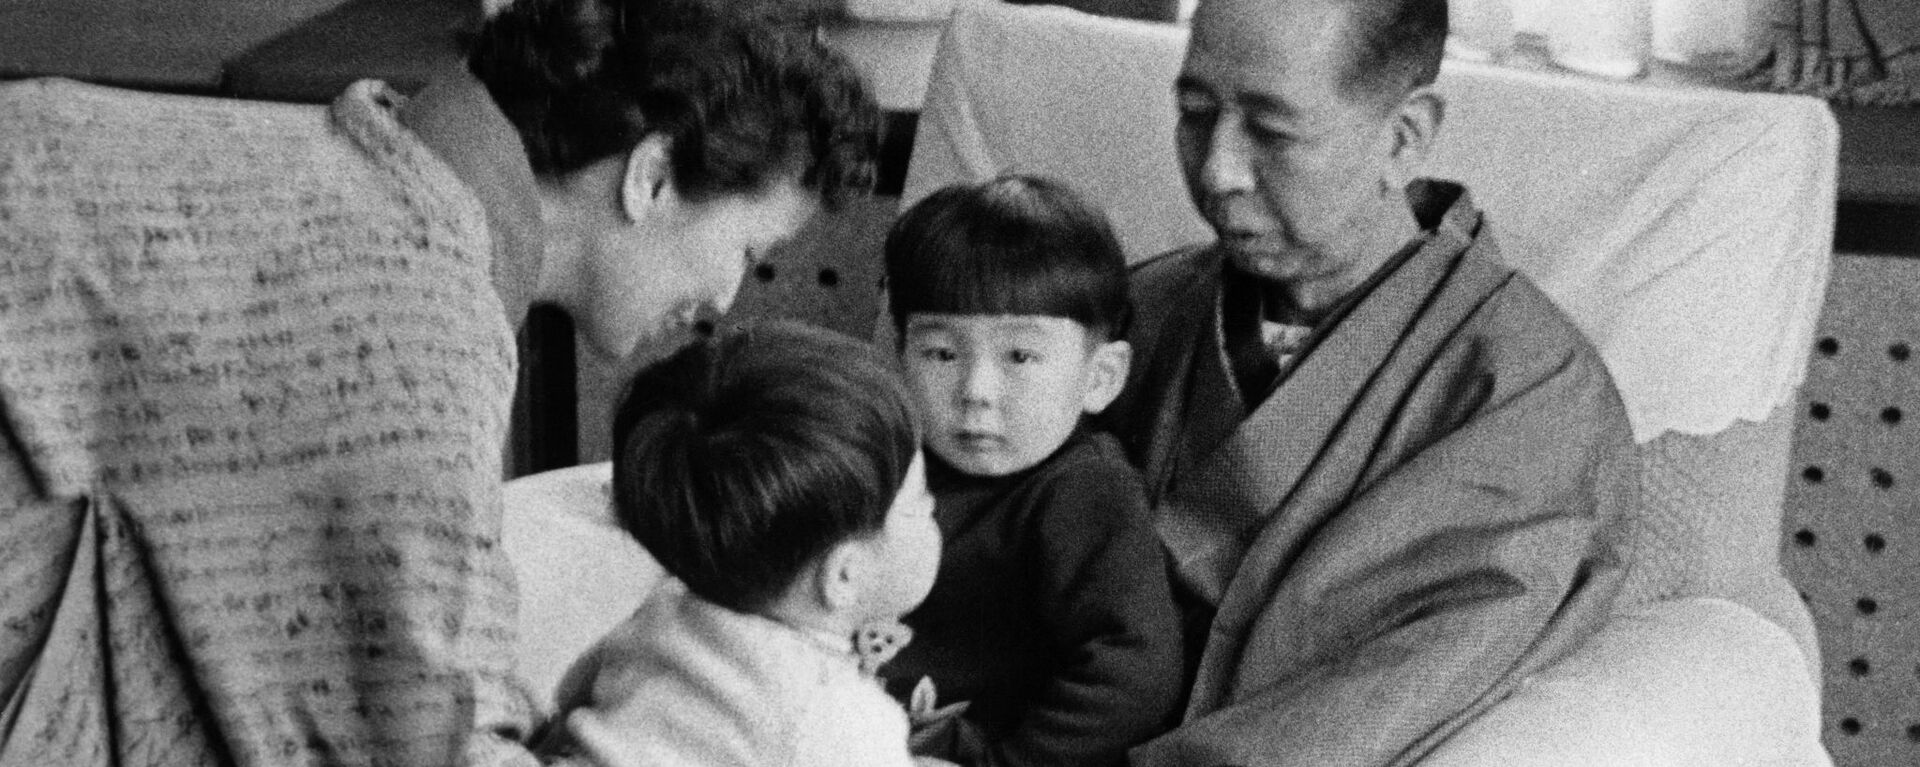 Японский политик Синдзо Абэ с дедушкой и бабушкой, 1960 год  - Sputnik Кыргызстан, 1920, 05.06.2021